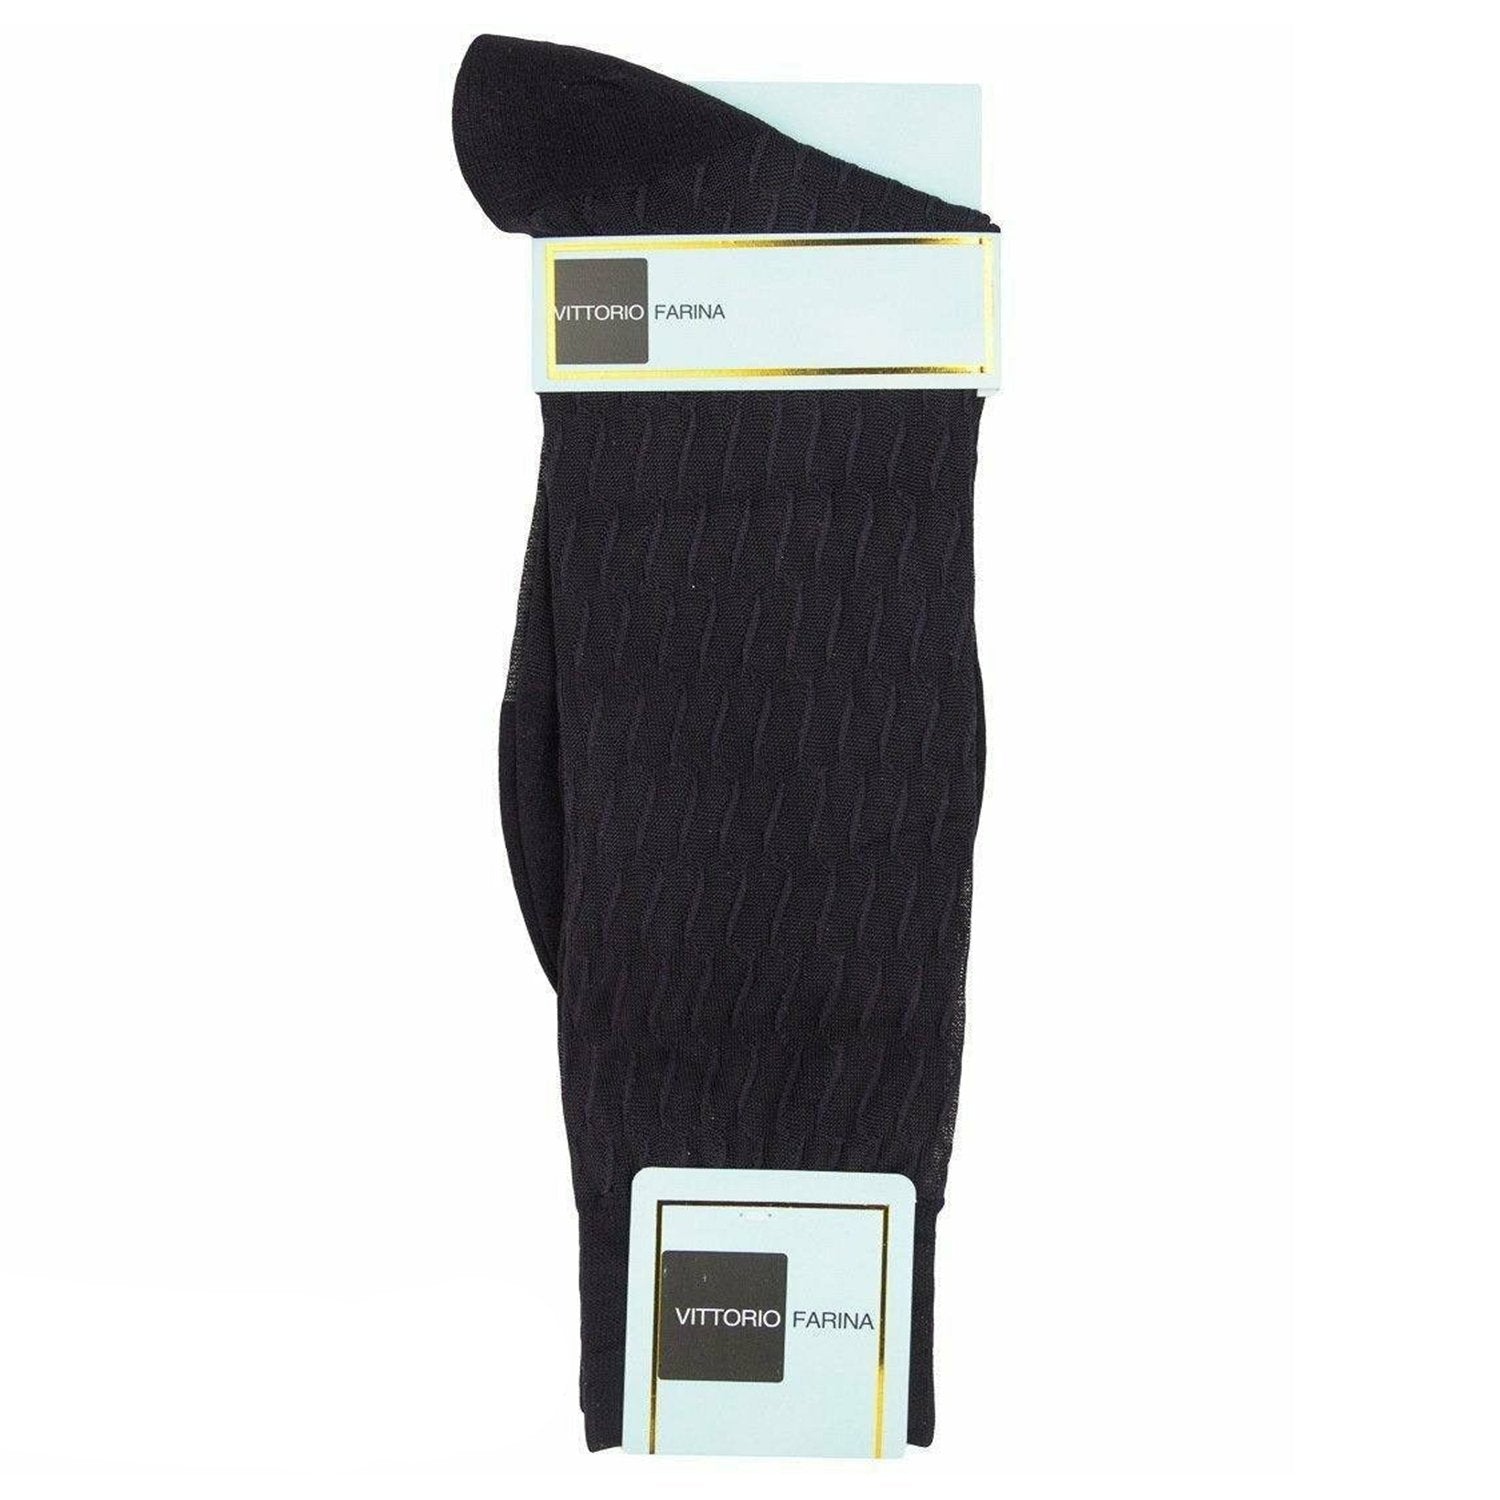 Vittorio Farina Men's Vibrant Colorful Anklet Socks (Retail) by Classy Cufflinks - ank-black-s3-3 - Classy Cufflinks